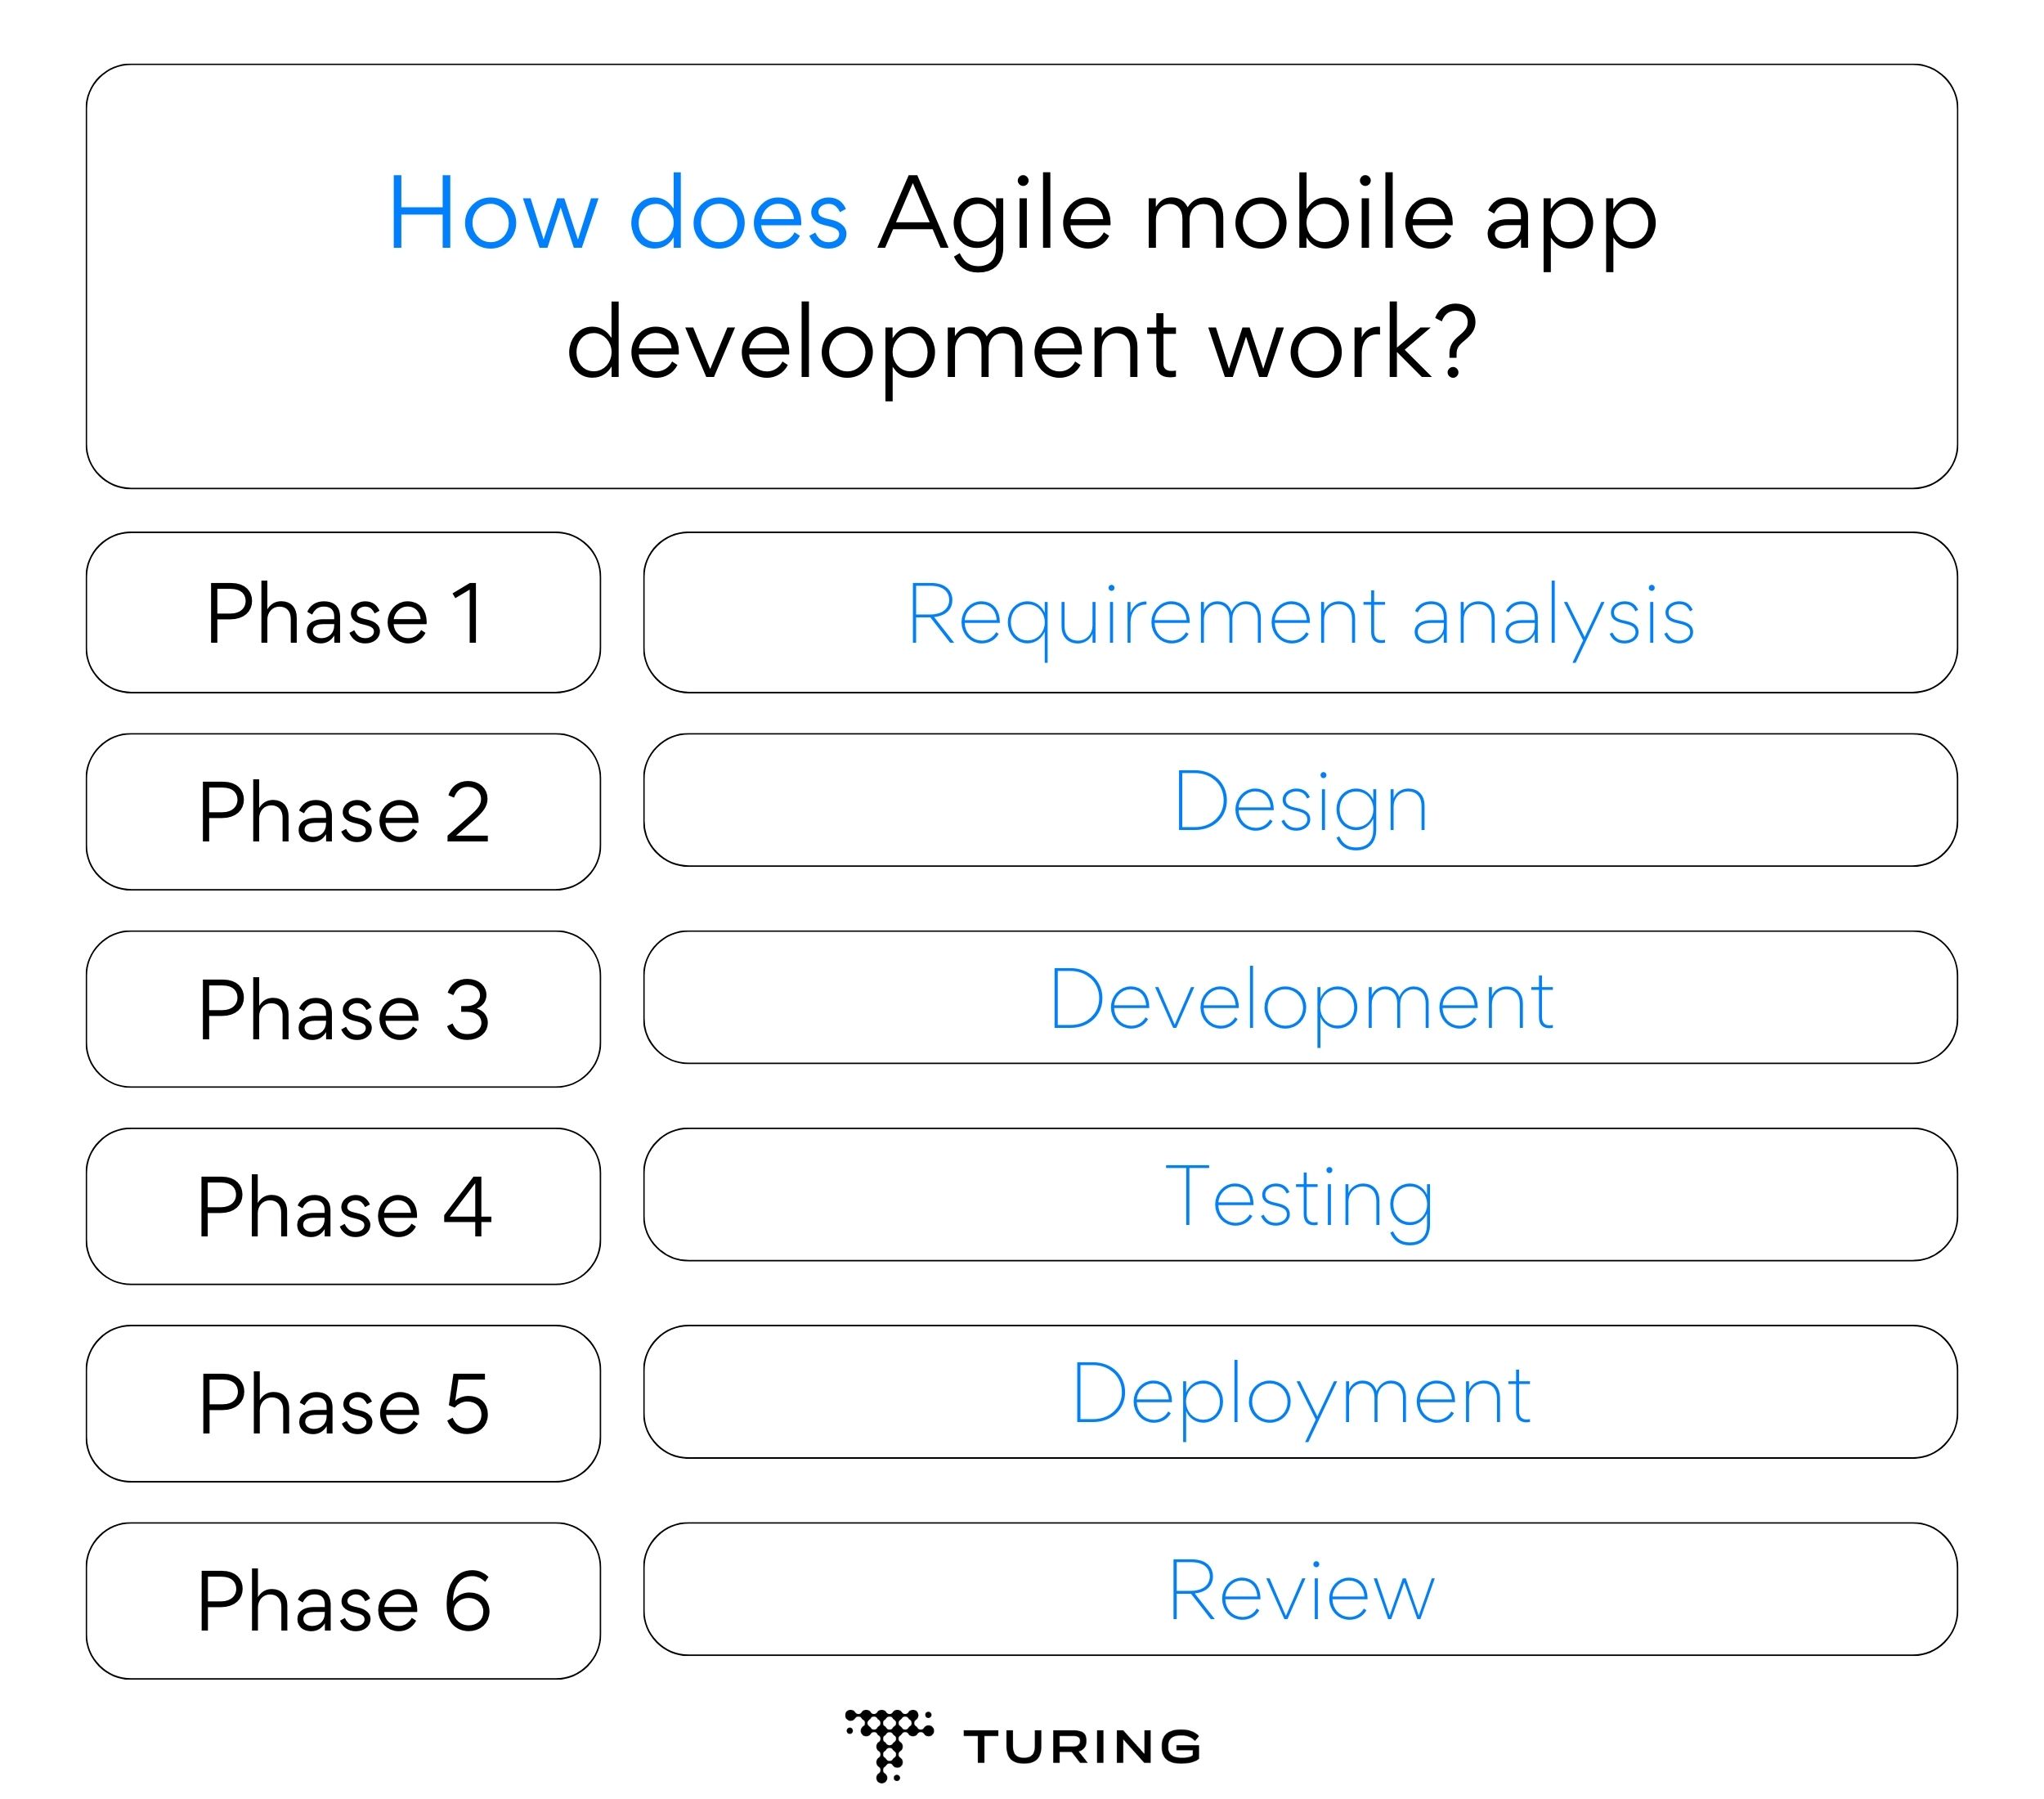 How does Agile mobile app development work